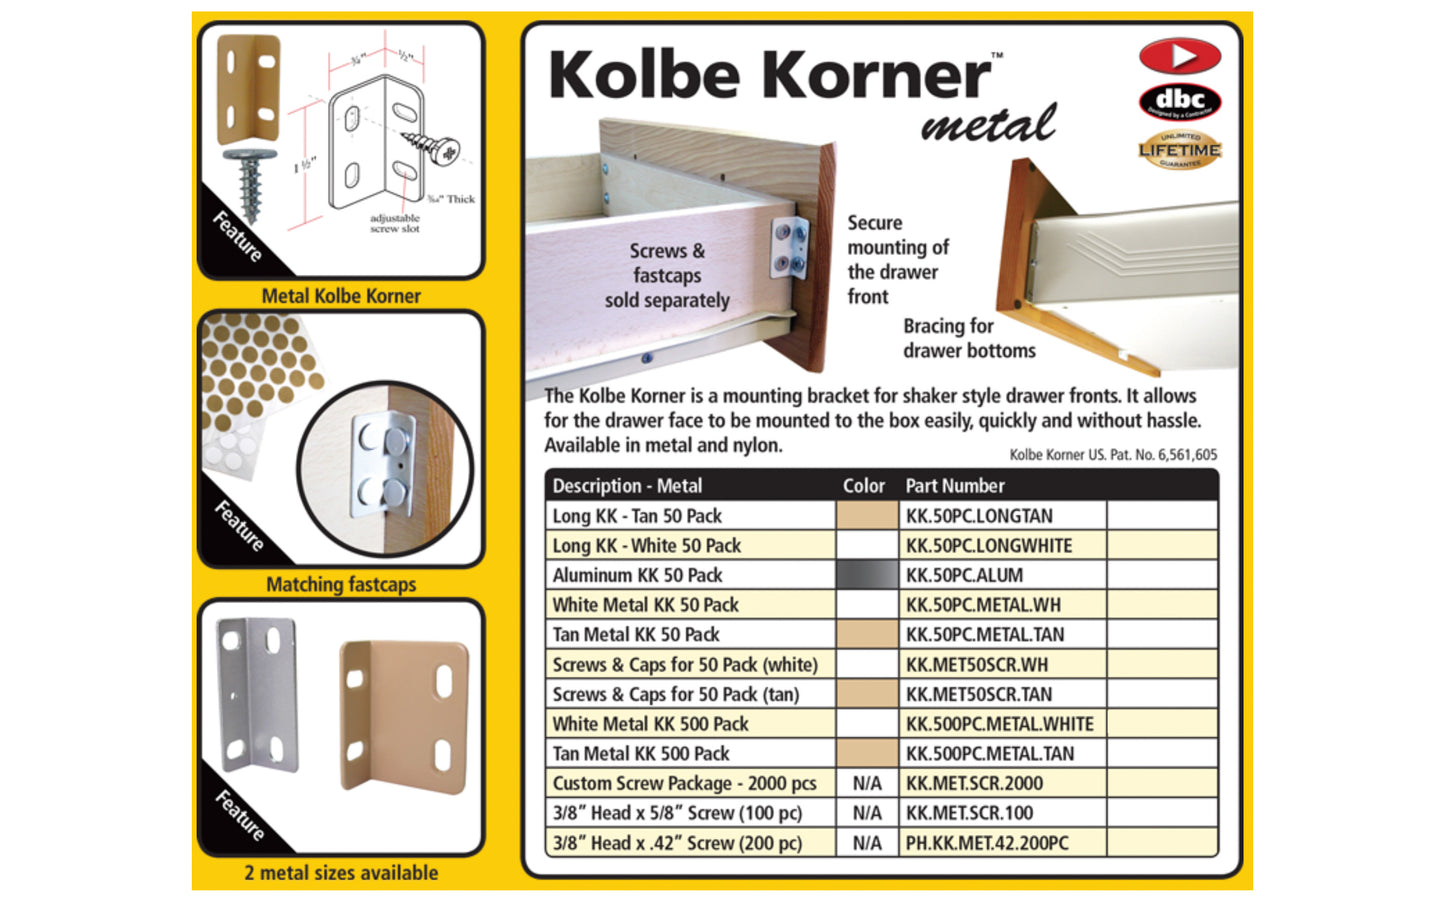 FastCap 5/8" Long Screws for Metal Kolbe Korners ~ 100 Pack - Model No. KK.MET.SCR.100